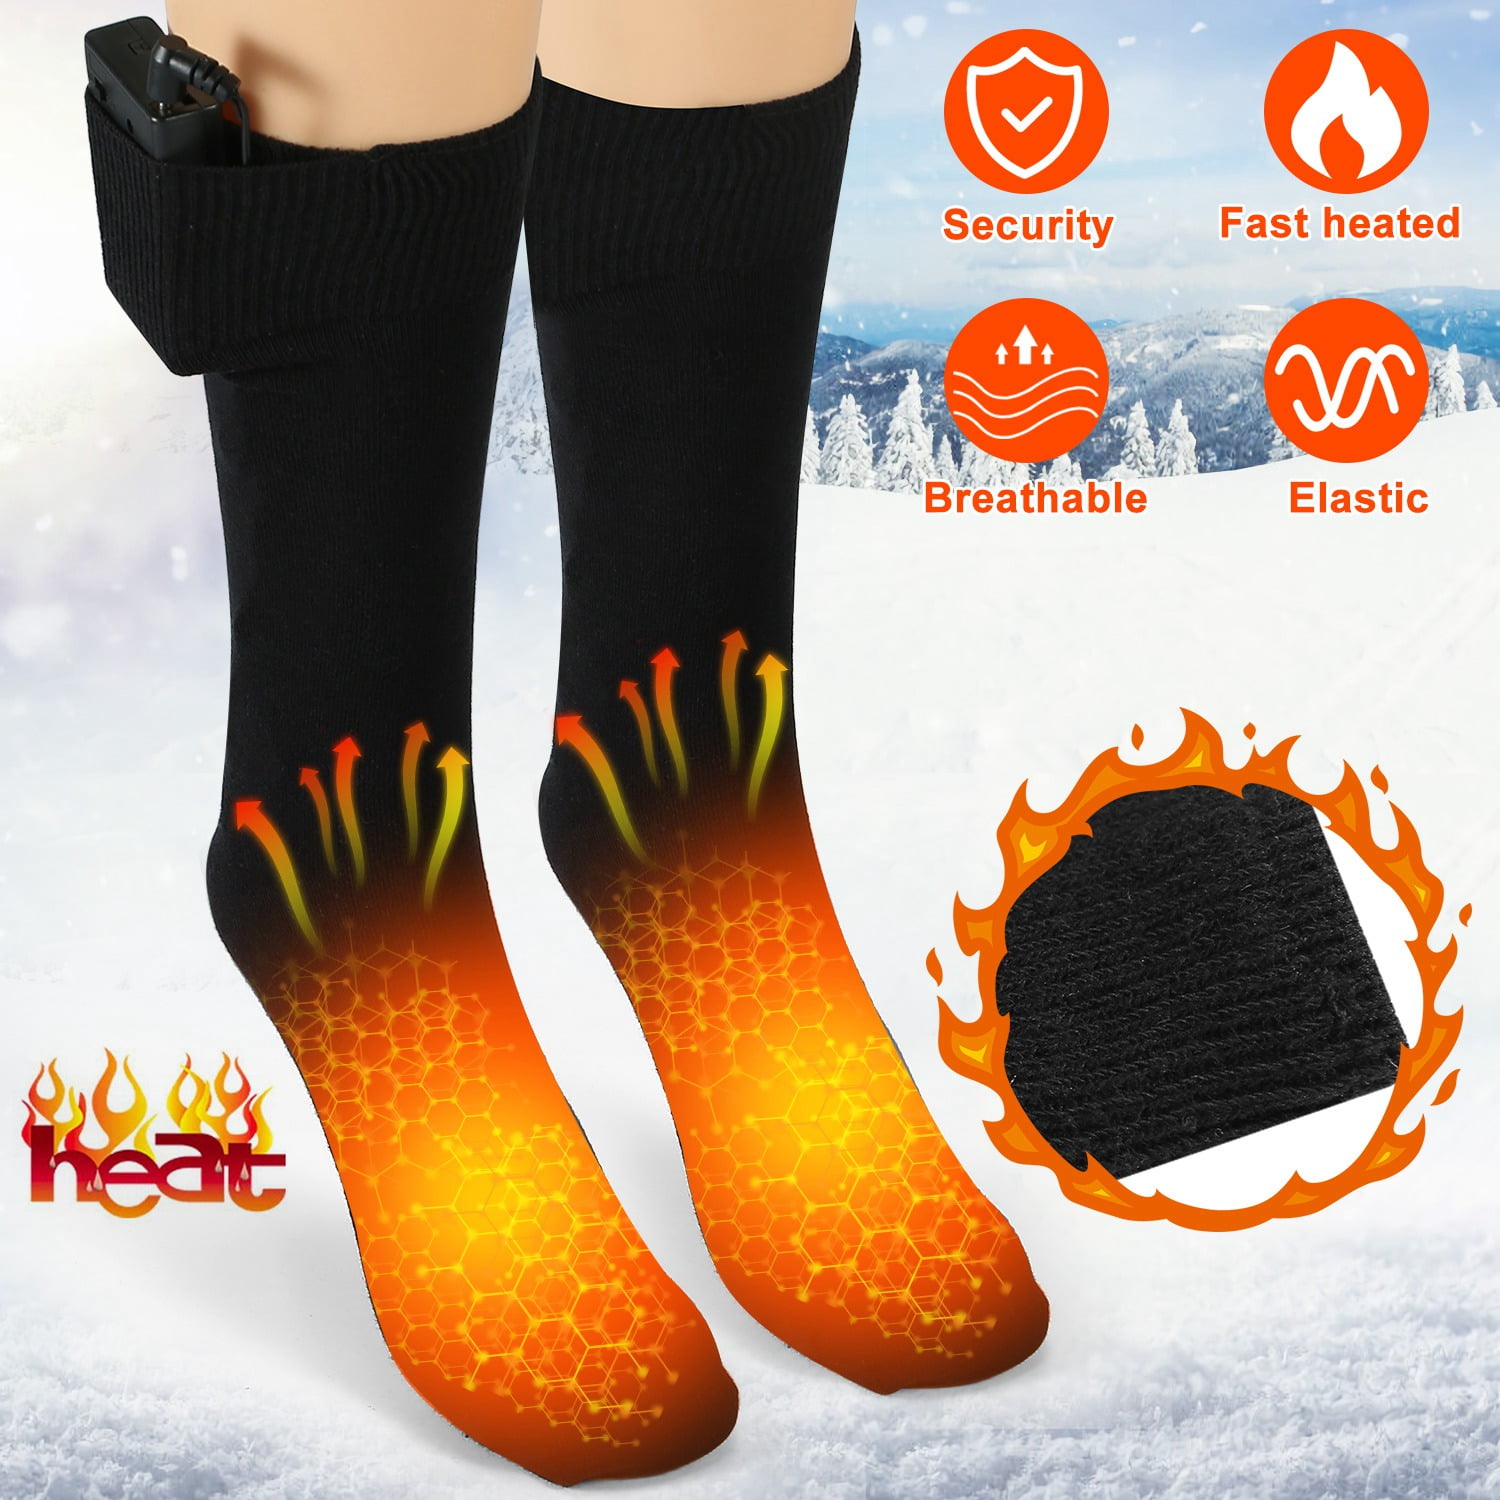 2 Types Winter Warm Thermal Socks Electric Heated Battery Socks Men Ladies Socks 